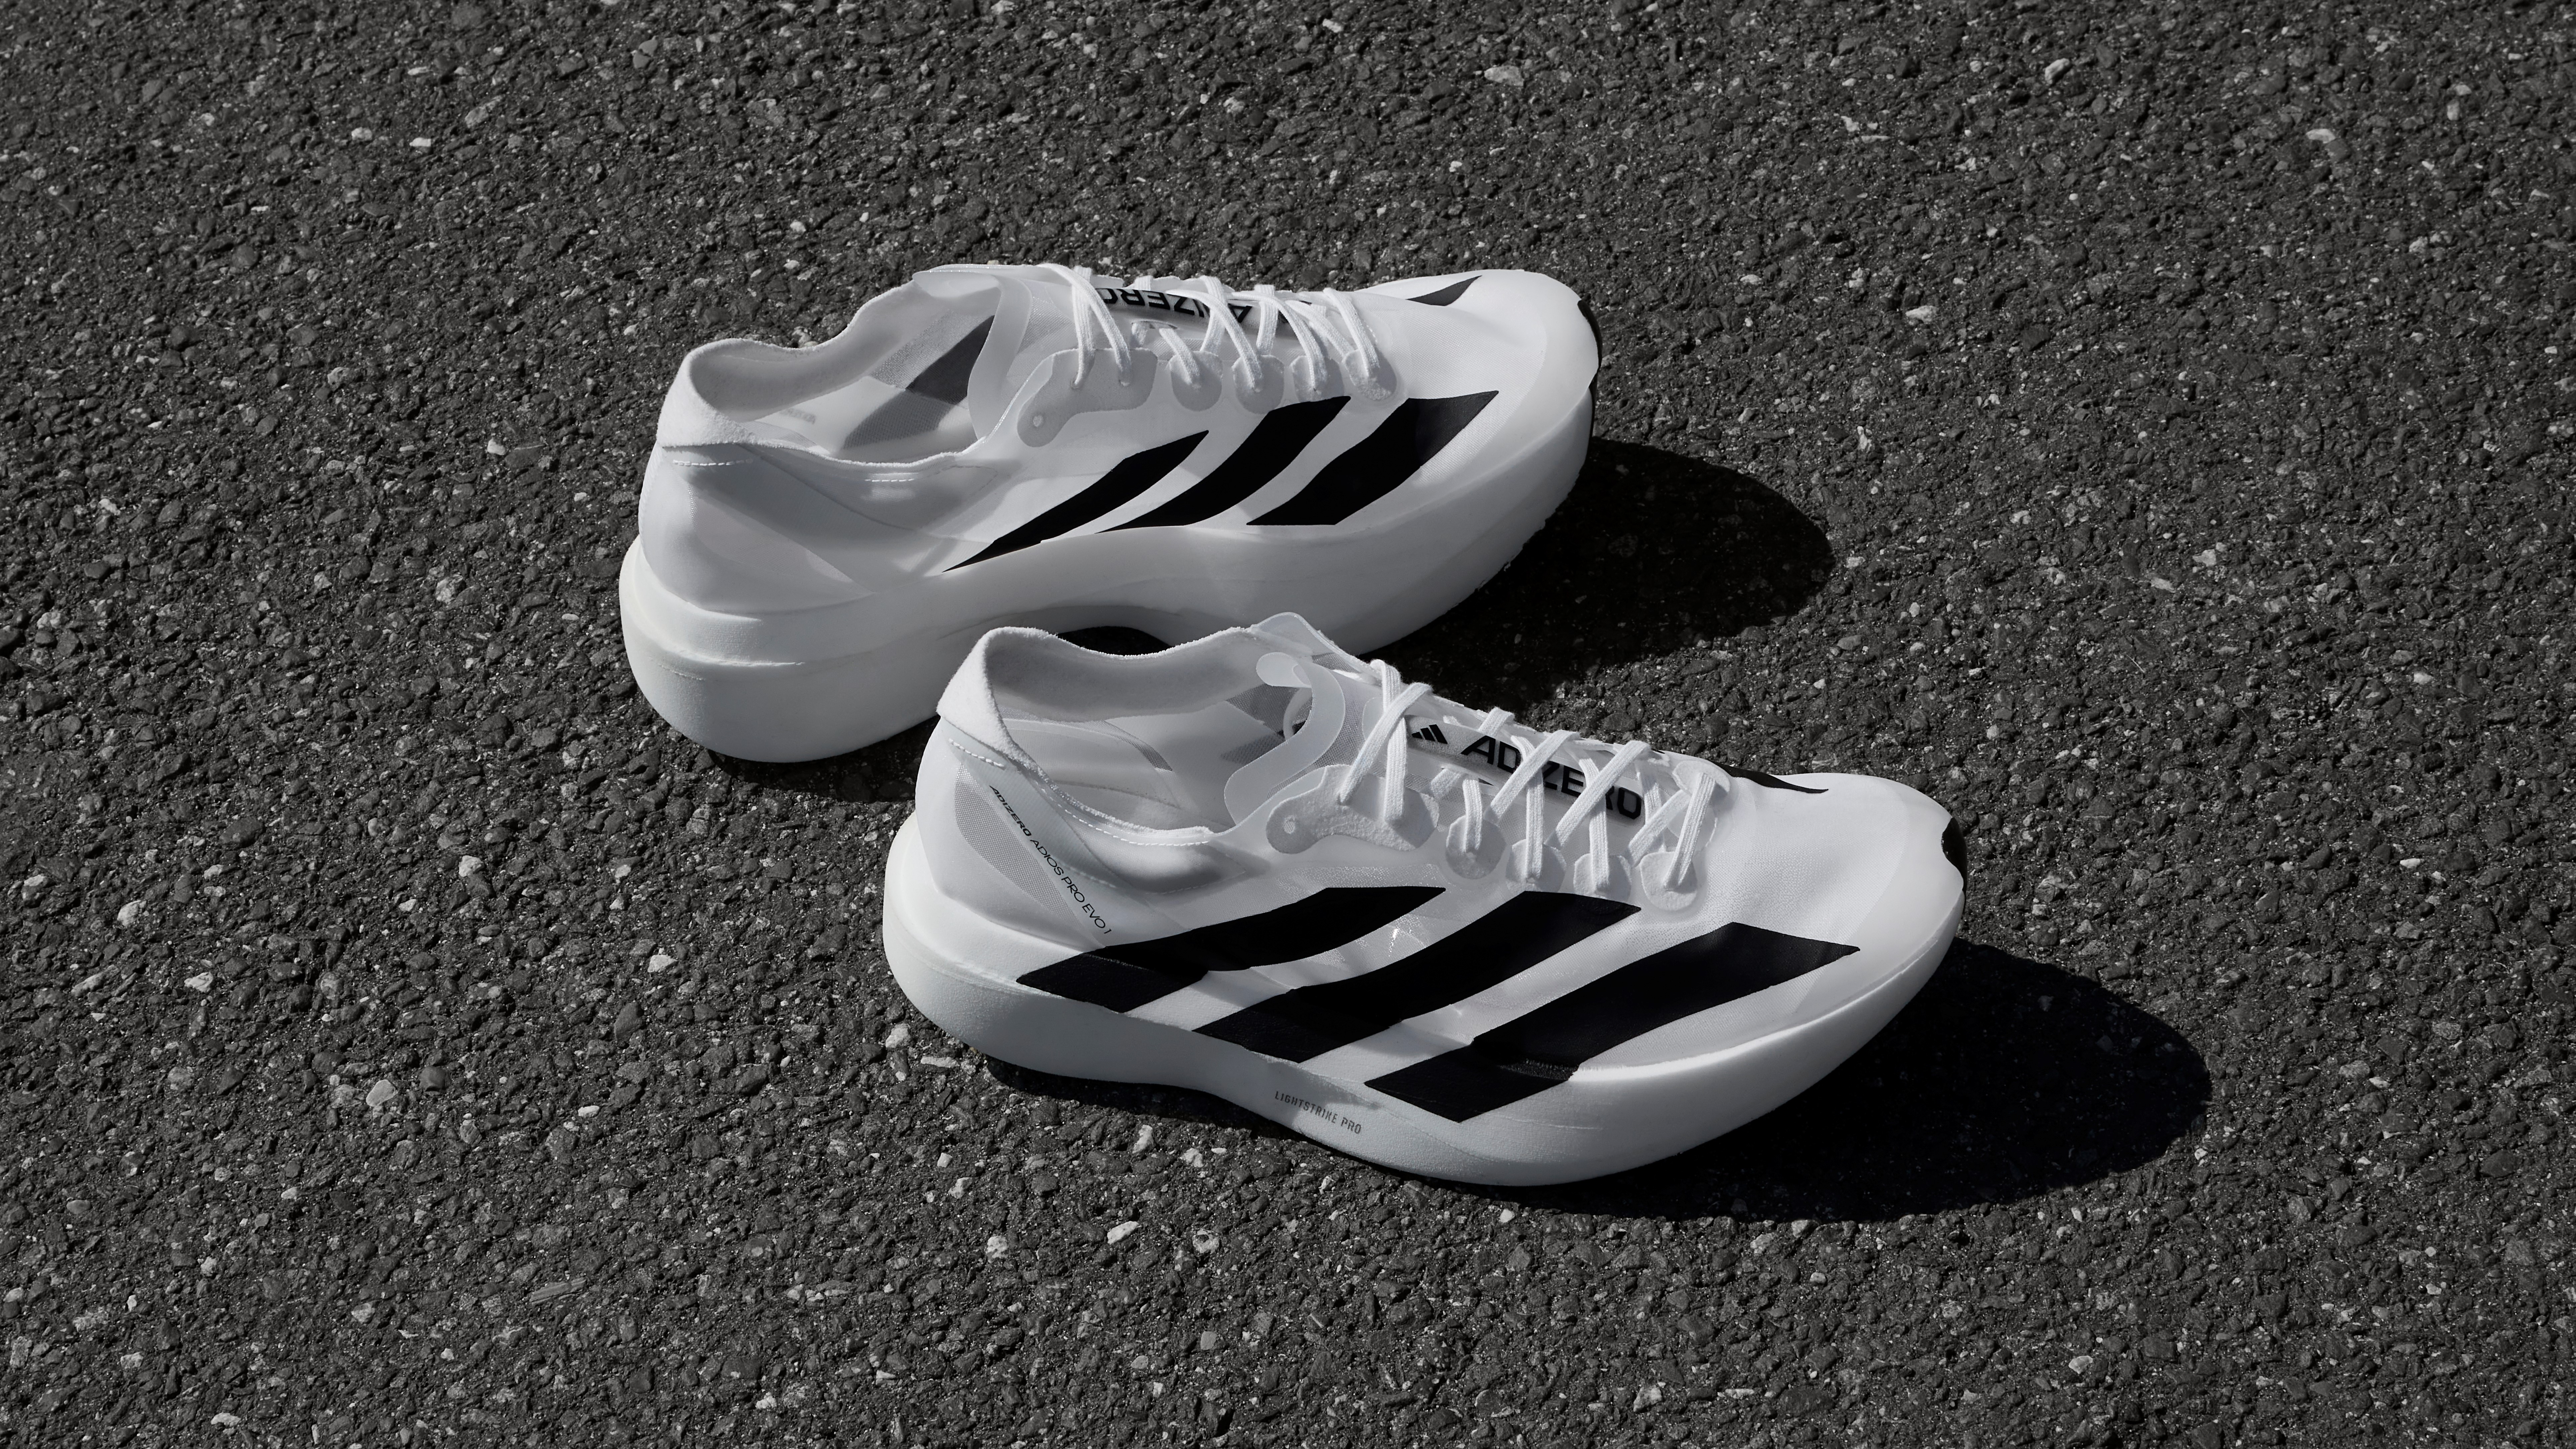 Adidas' Adios Adizero Pro Evo 1 super shoe looks fast — but the